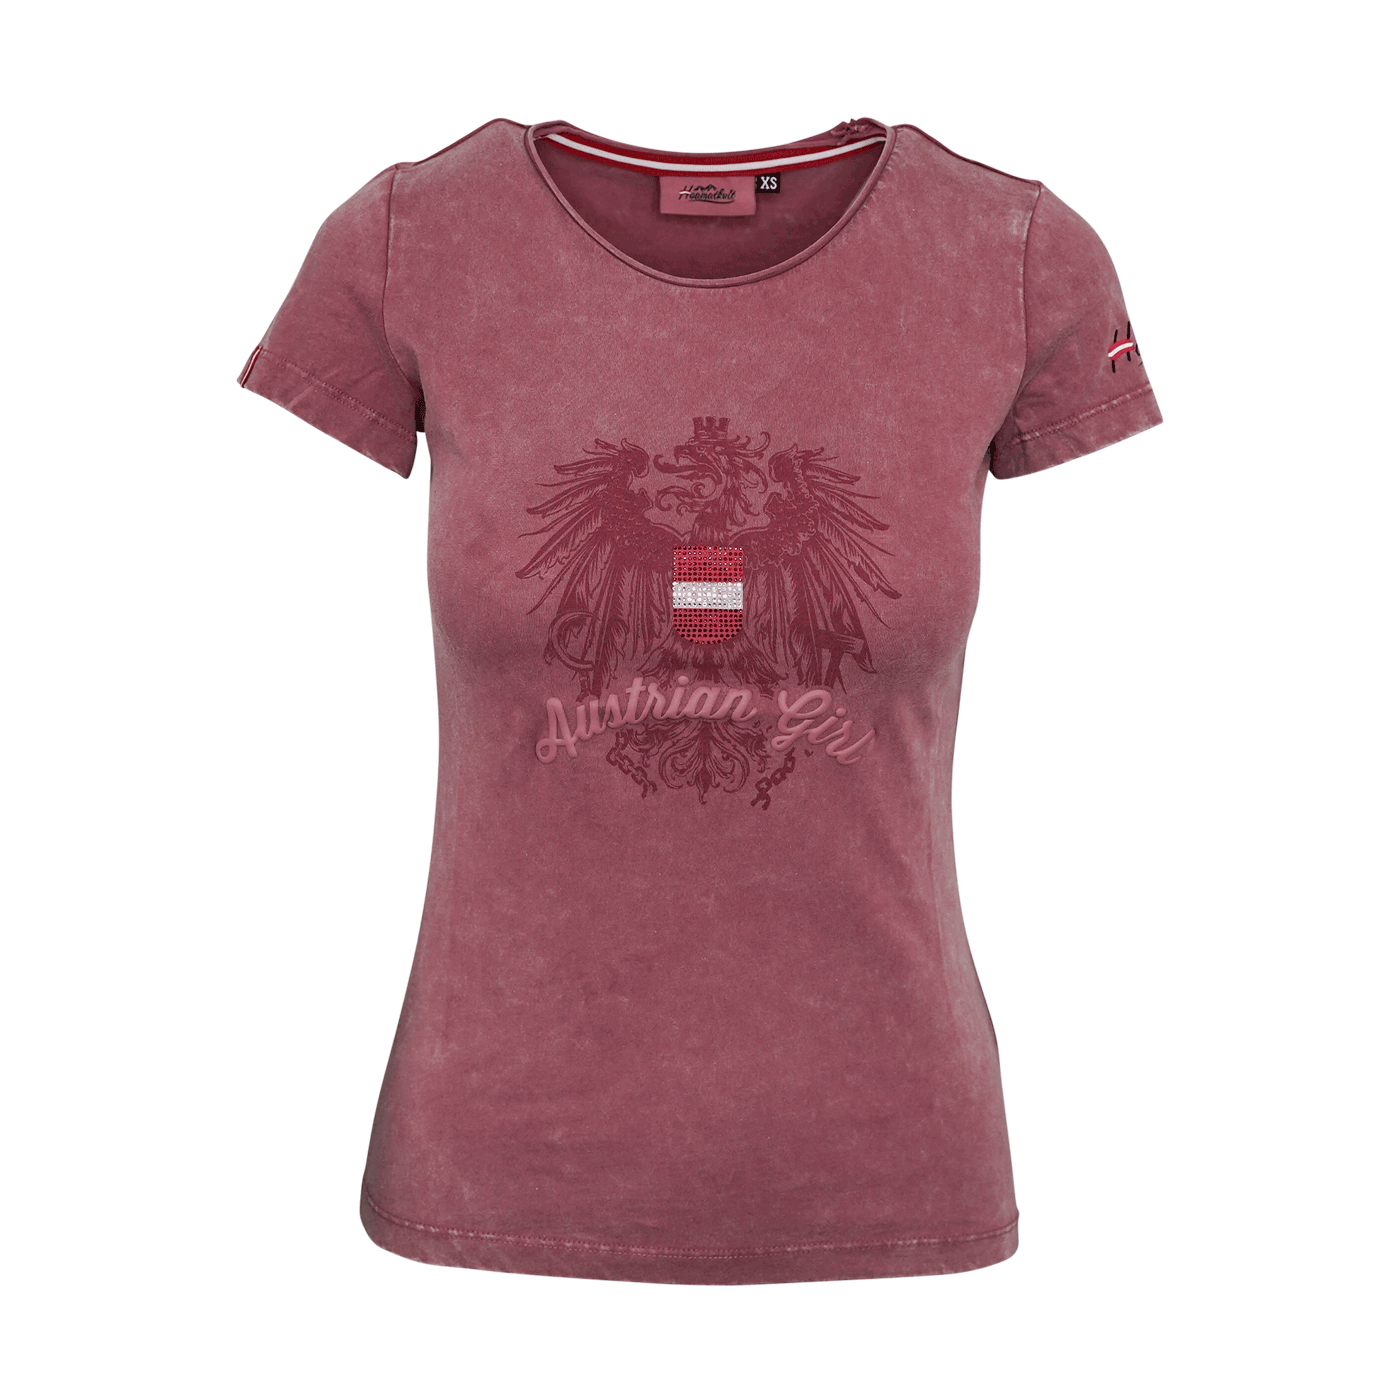 Rosa Austrian Girl T-Shirt von Hoamatkult